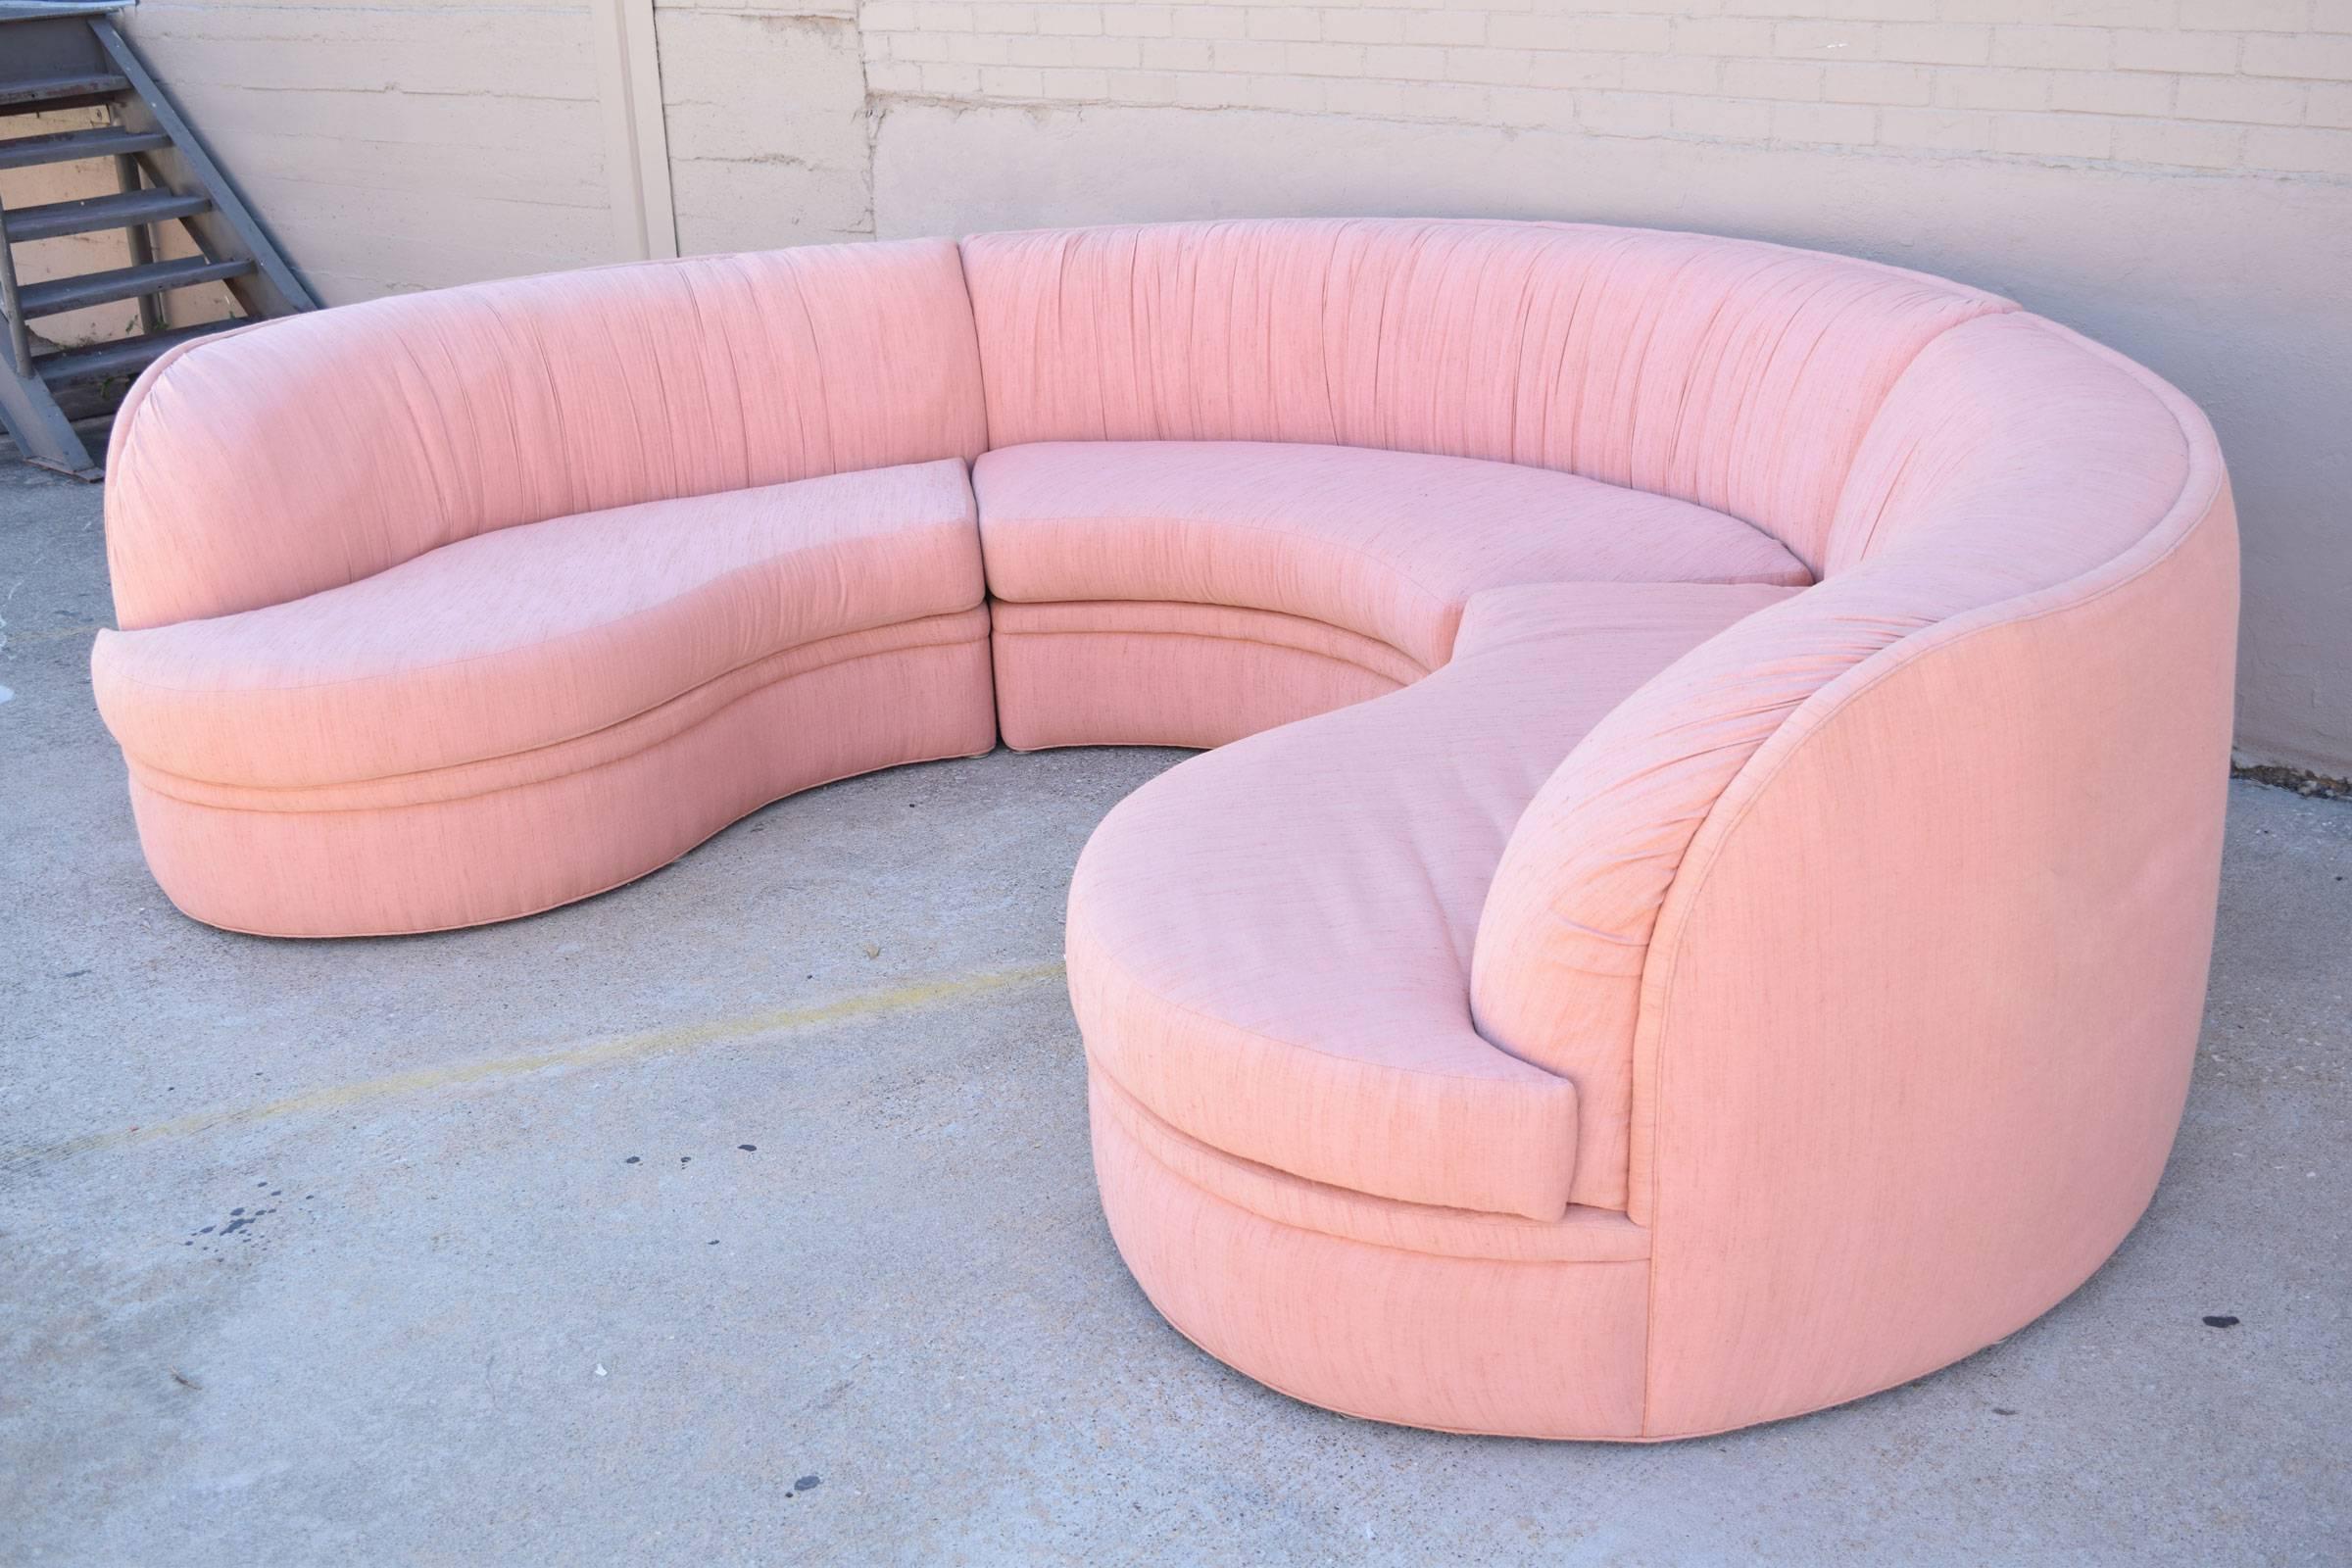 pink round couch